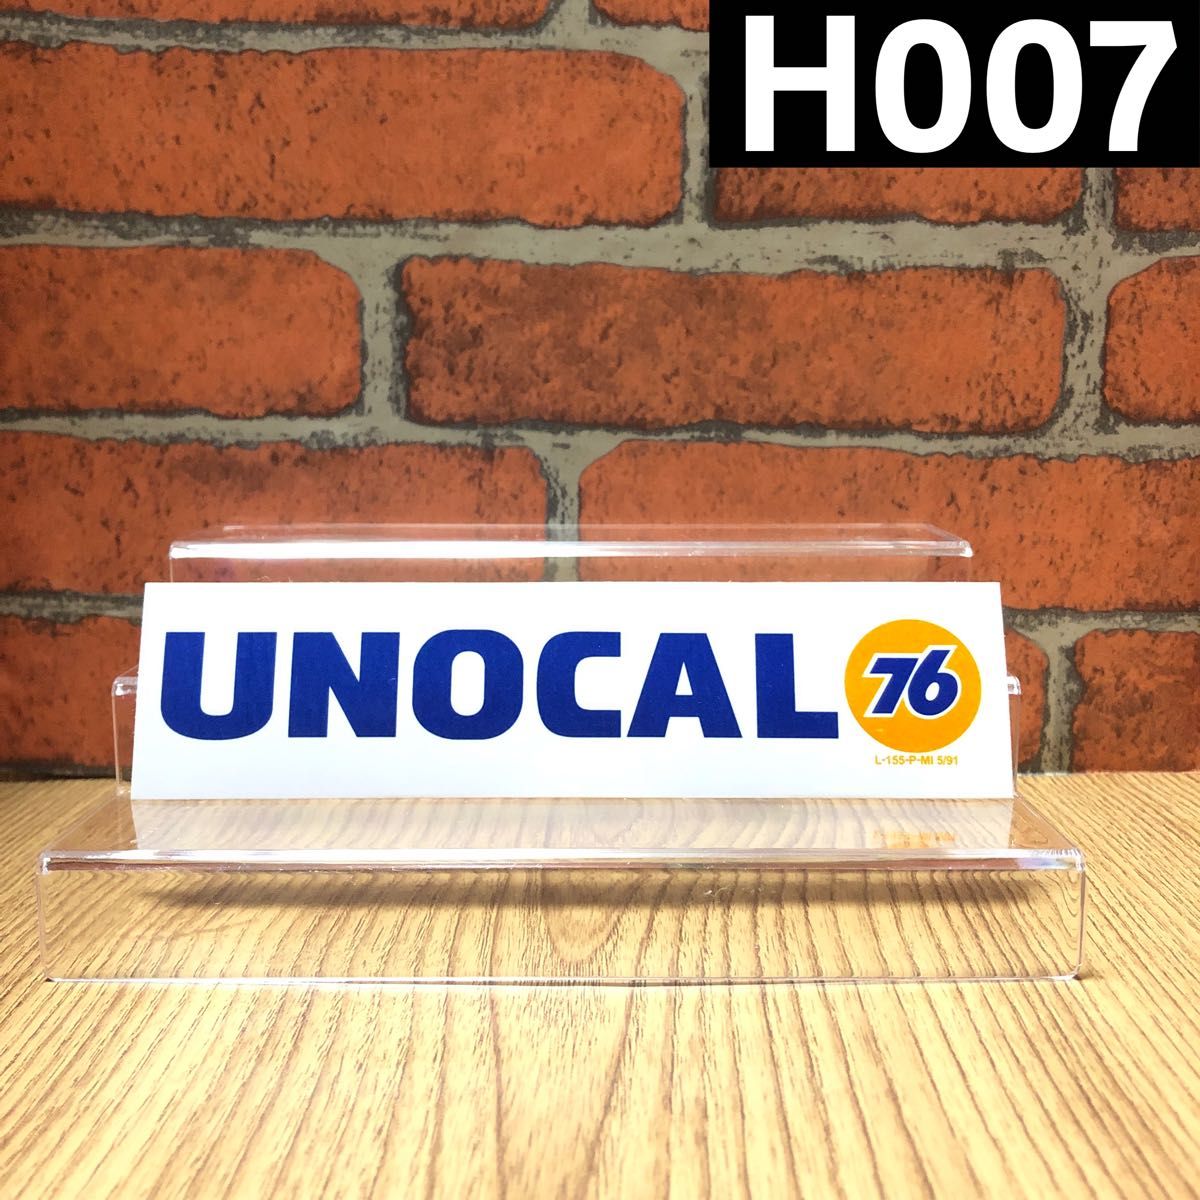 【H007】 76 UNOCAL ユノカル ステッカー【匿名発送 】